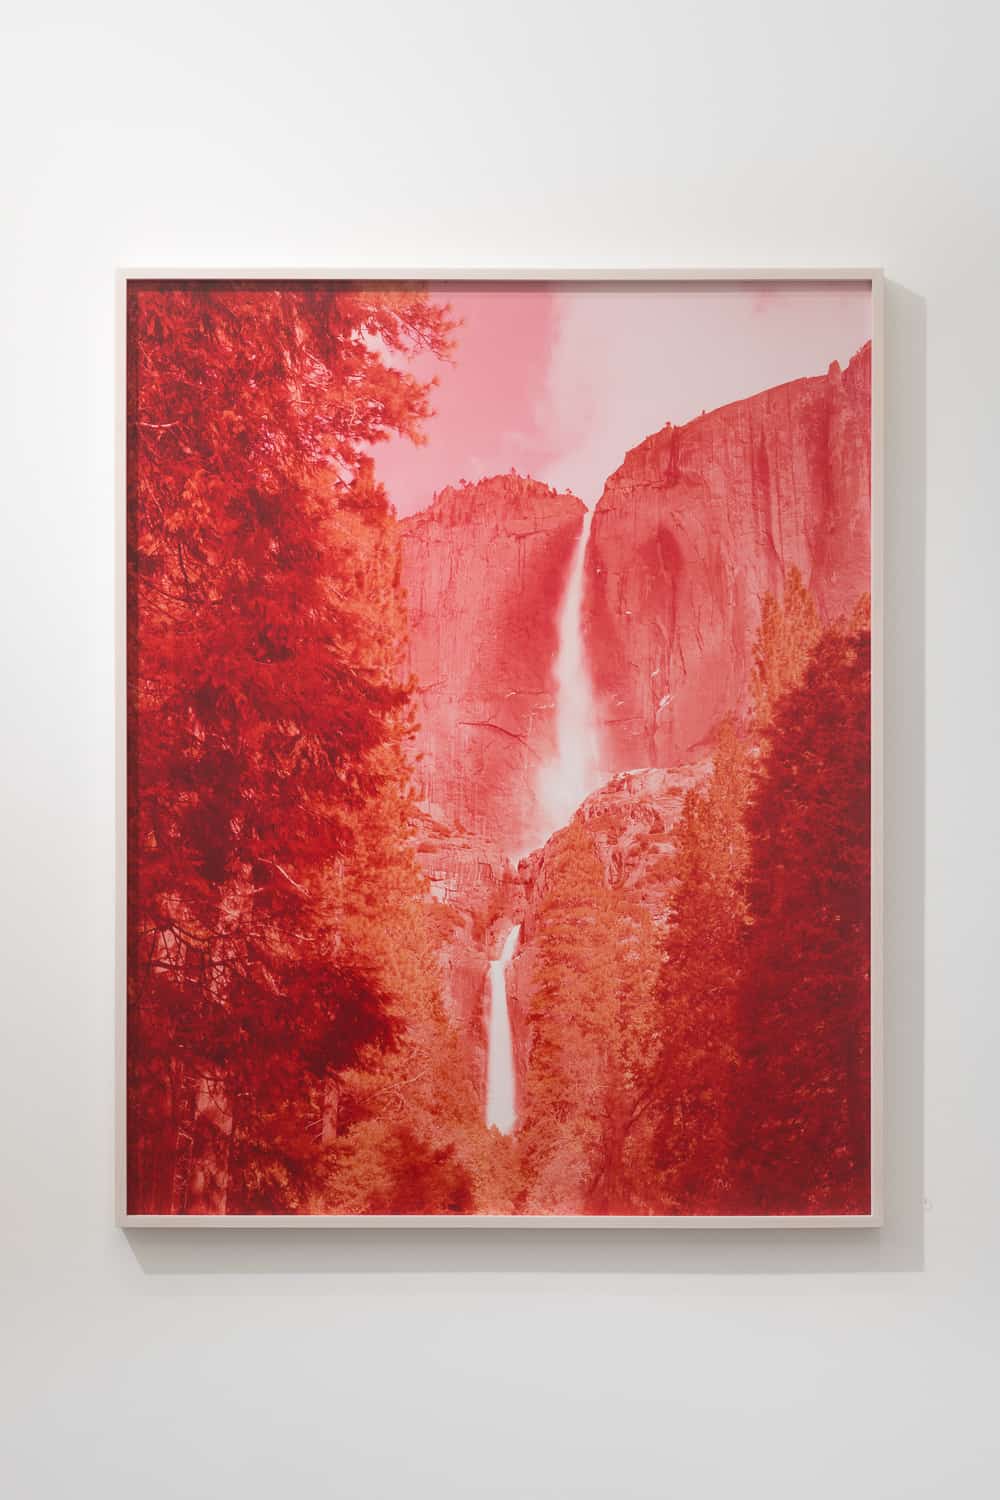 David Benjamin Sherry, Yosemite Falls, Yosemite California, 2013, c-type print, framed